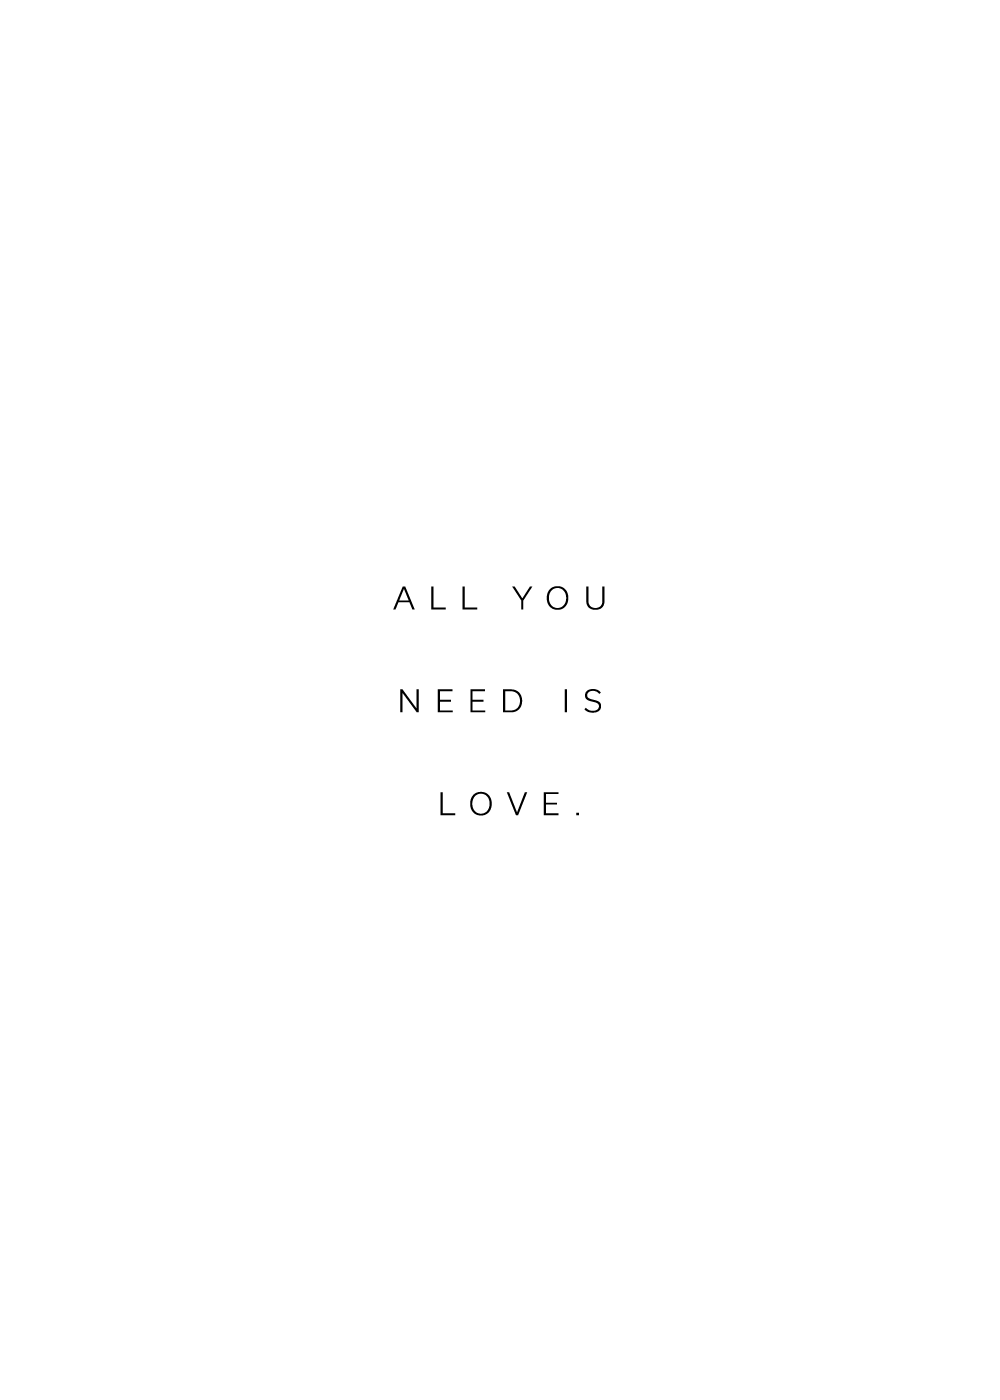 "All you need is love" citatplakat